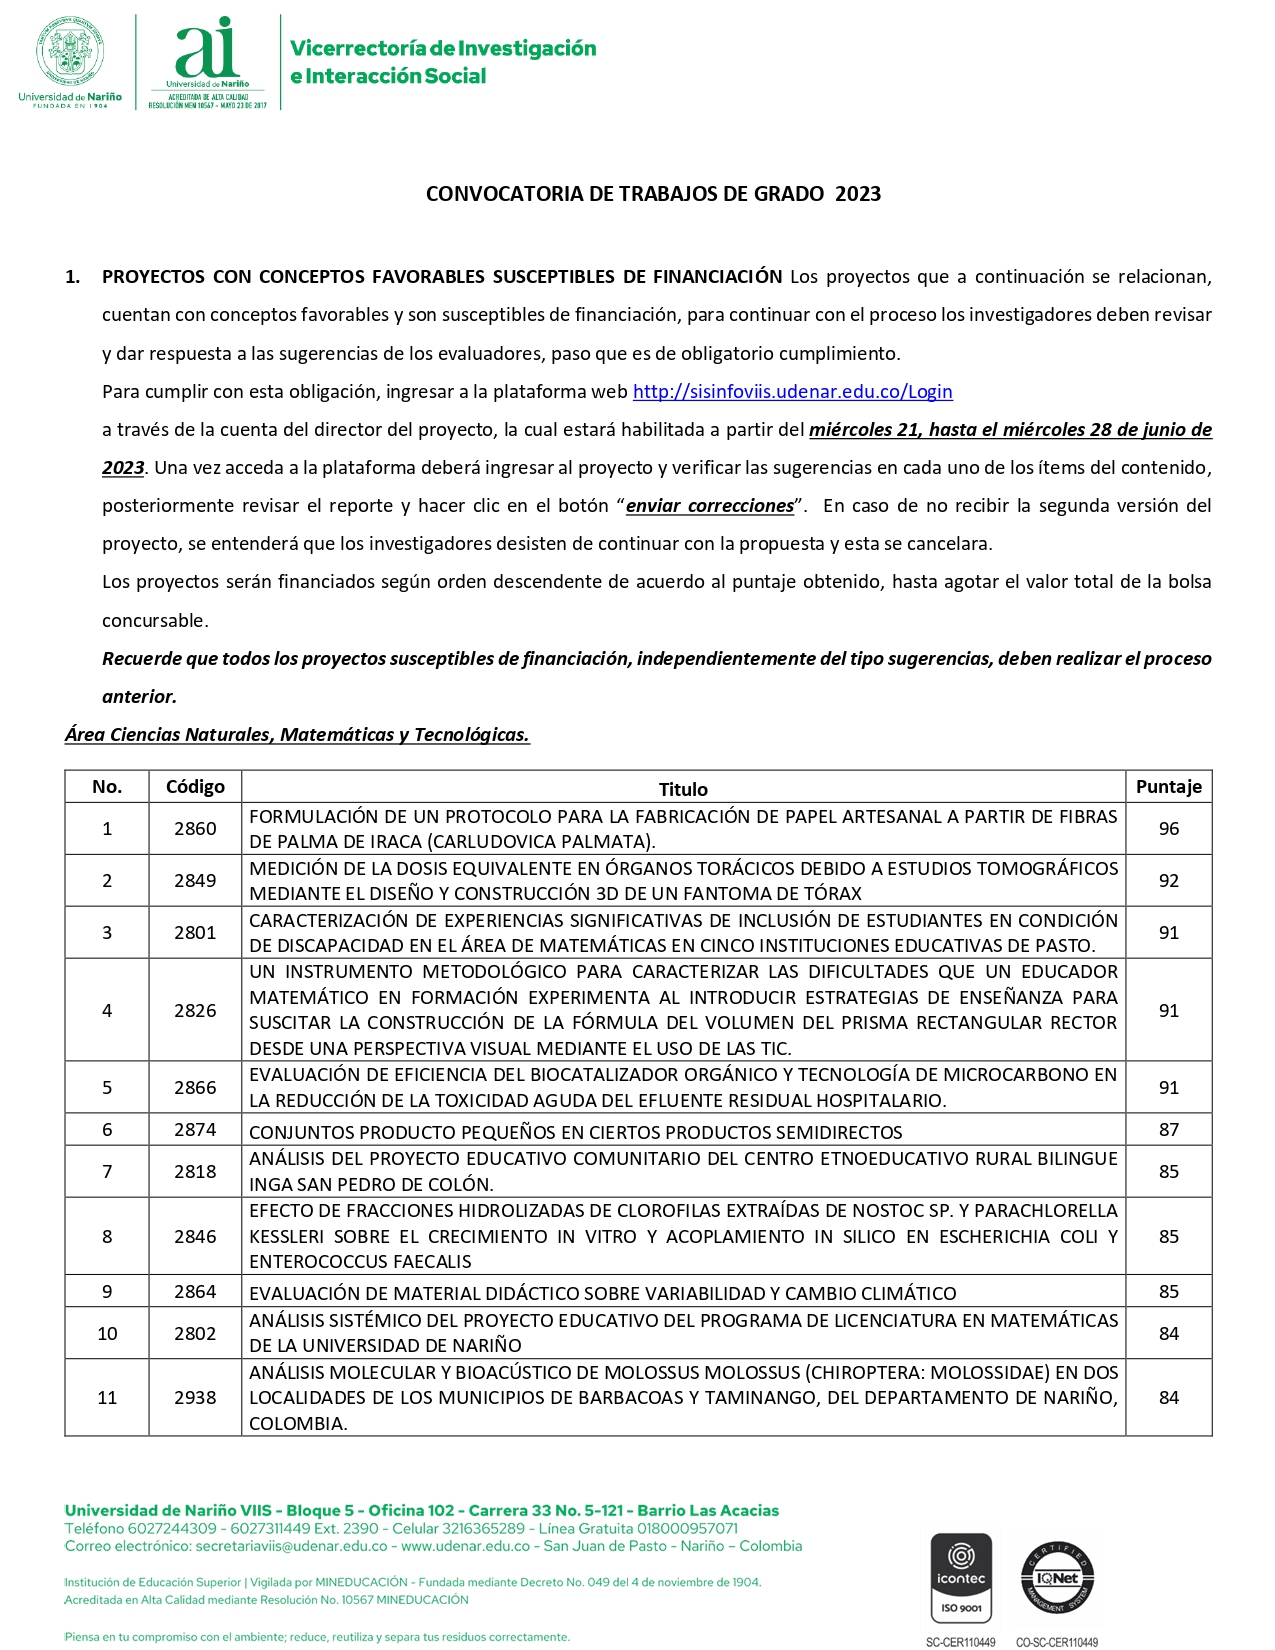 UDENAR-PERIODICO-COMUNICADO-003-CONVOCATORIAS-DE-INVESTIGACION-2_page-0005